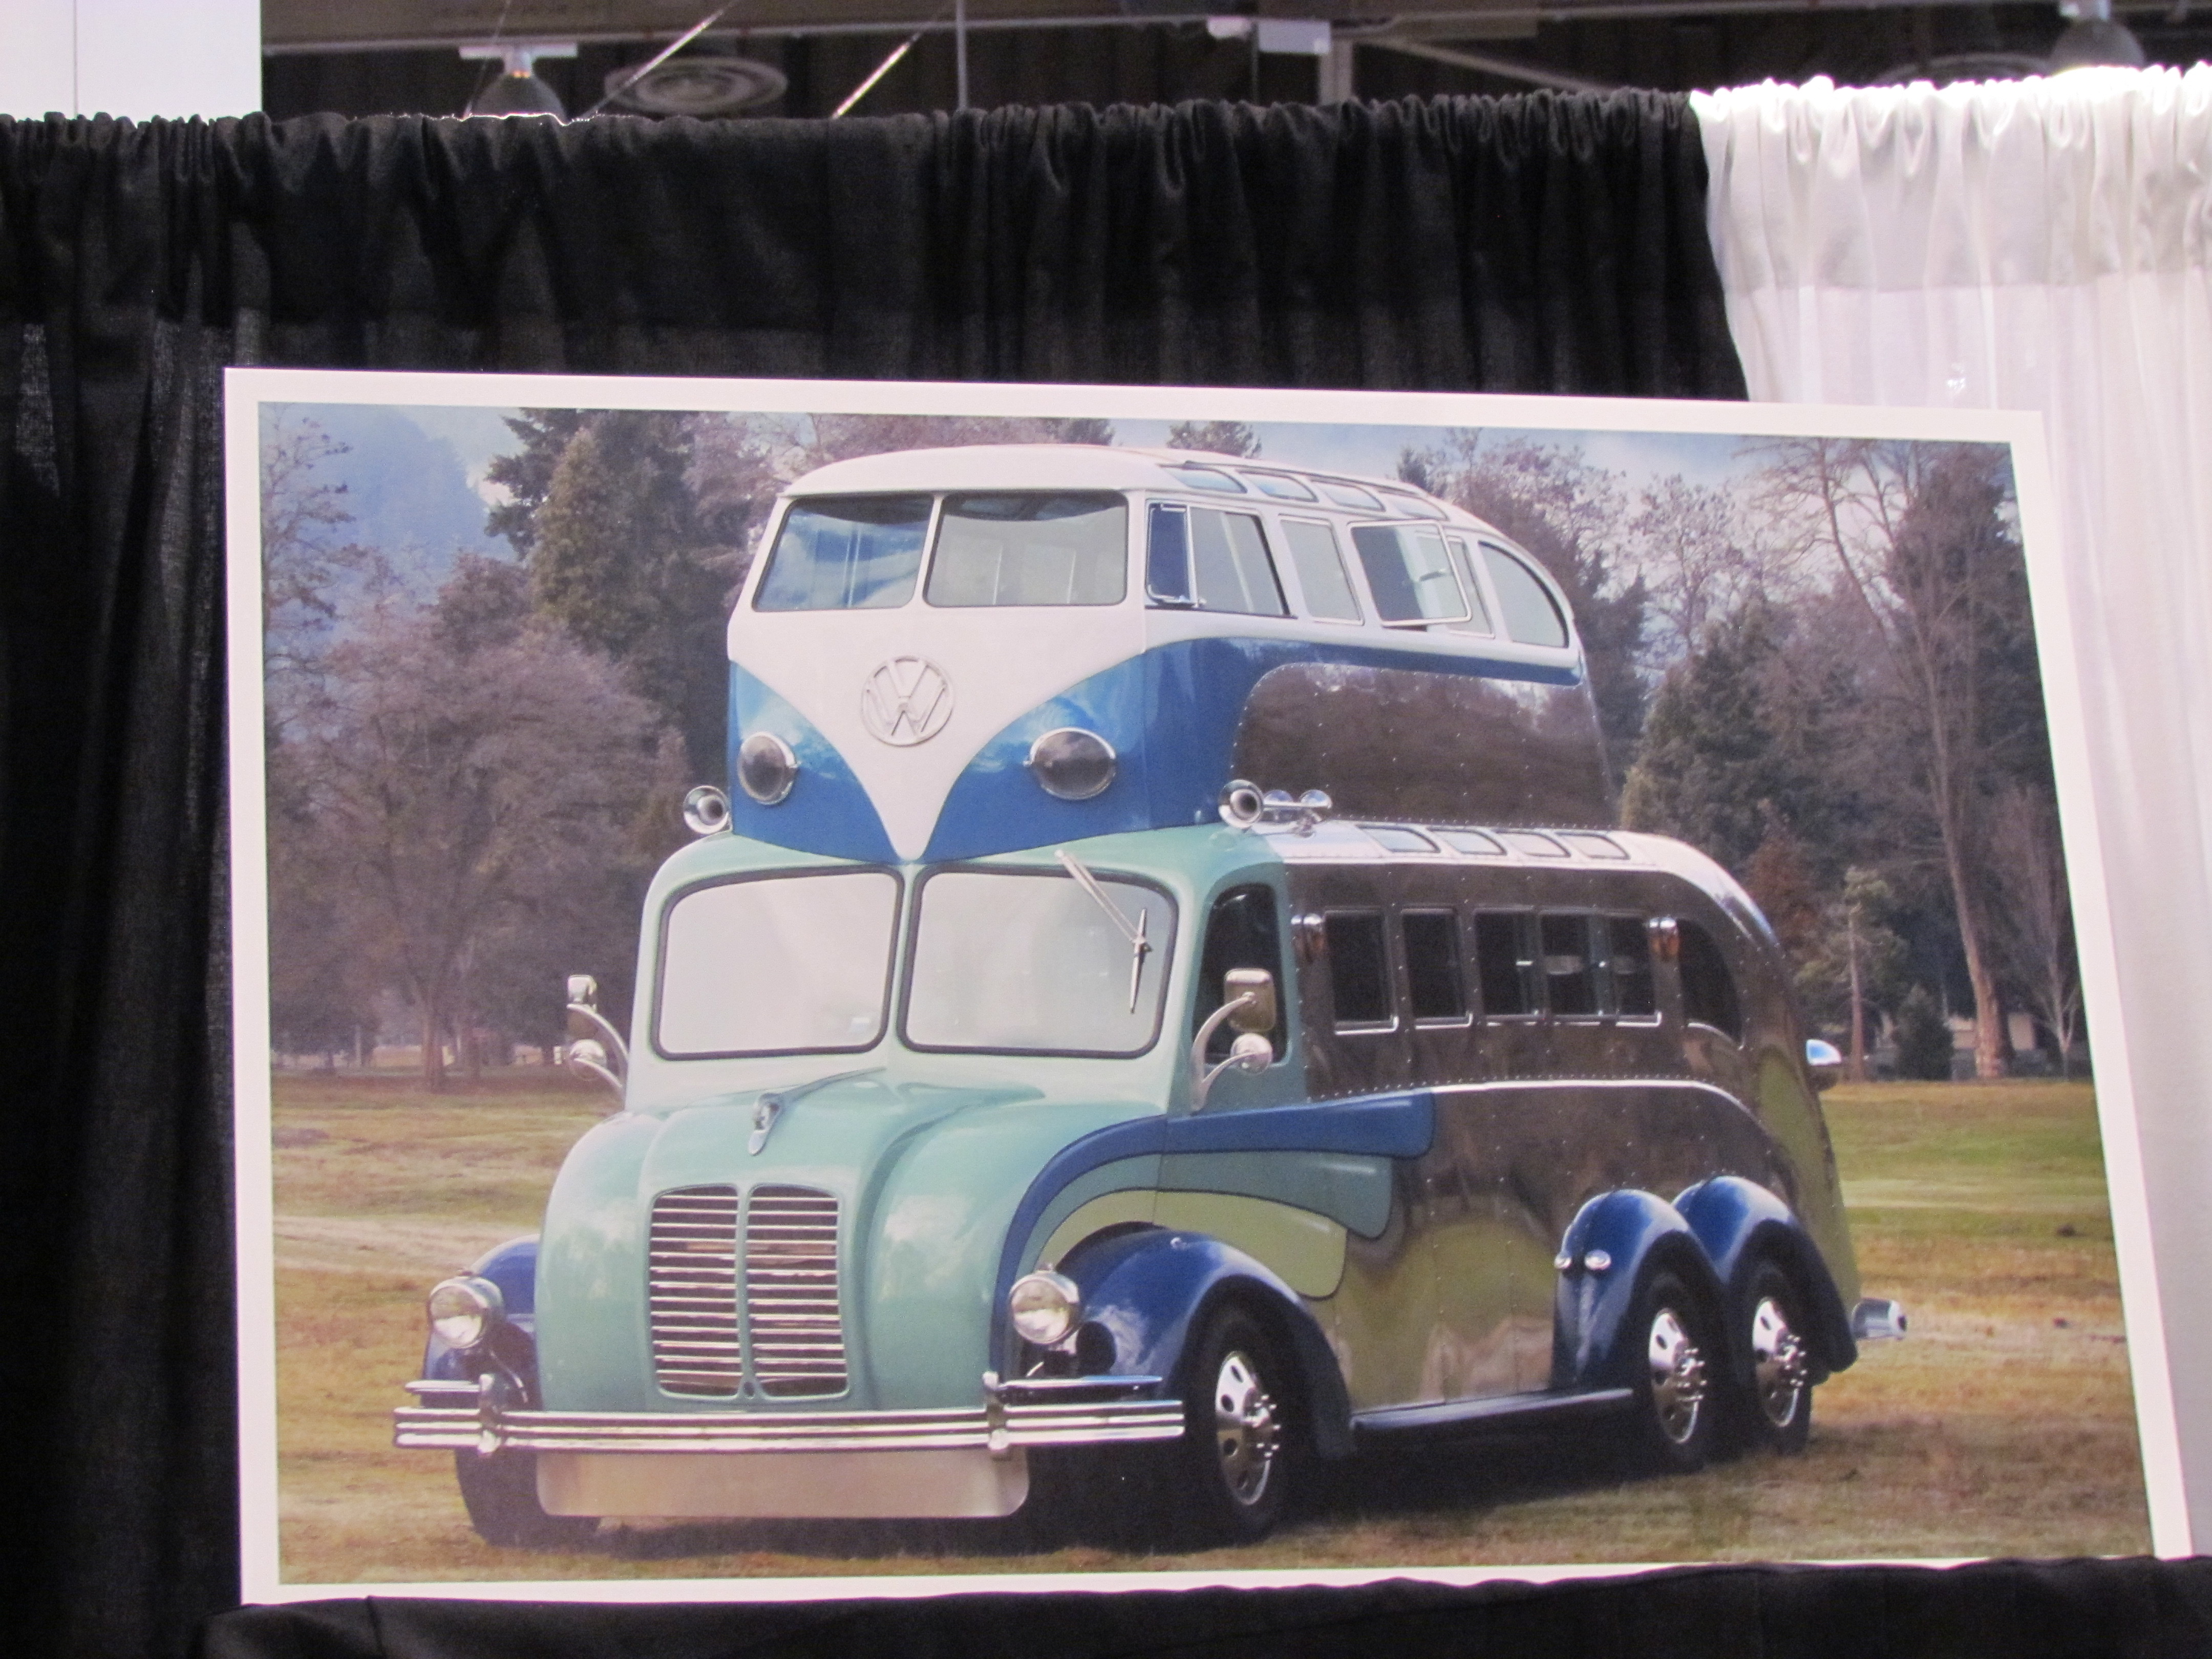 SEMA Seen, SEMA Seen: Randy Grubb’s 1959 VW bus/camper, ClassicCars.com Journal